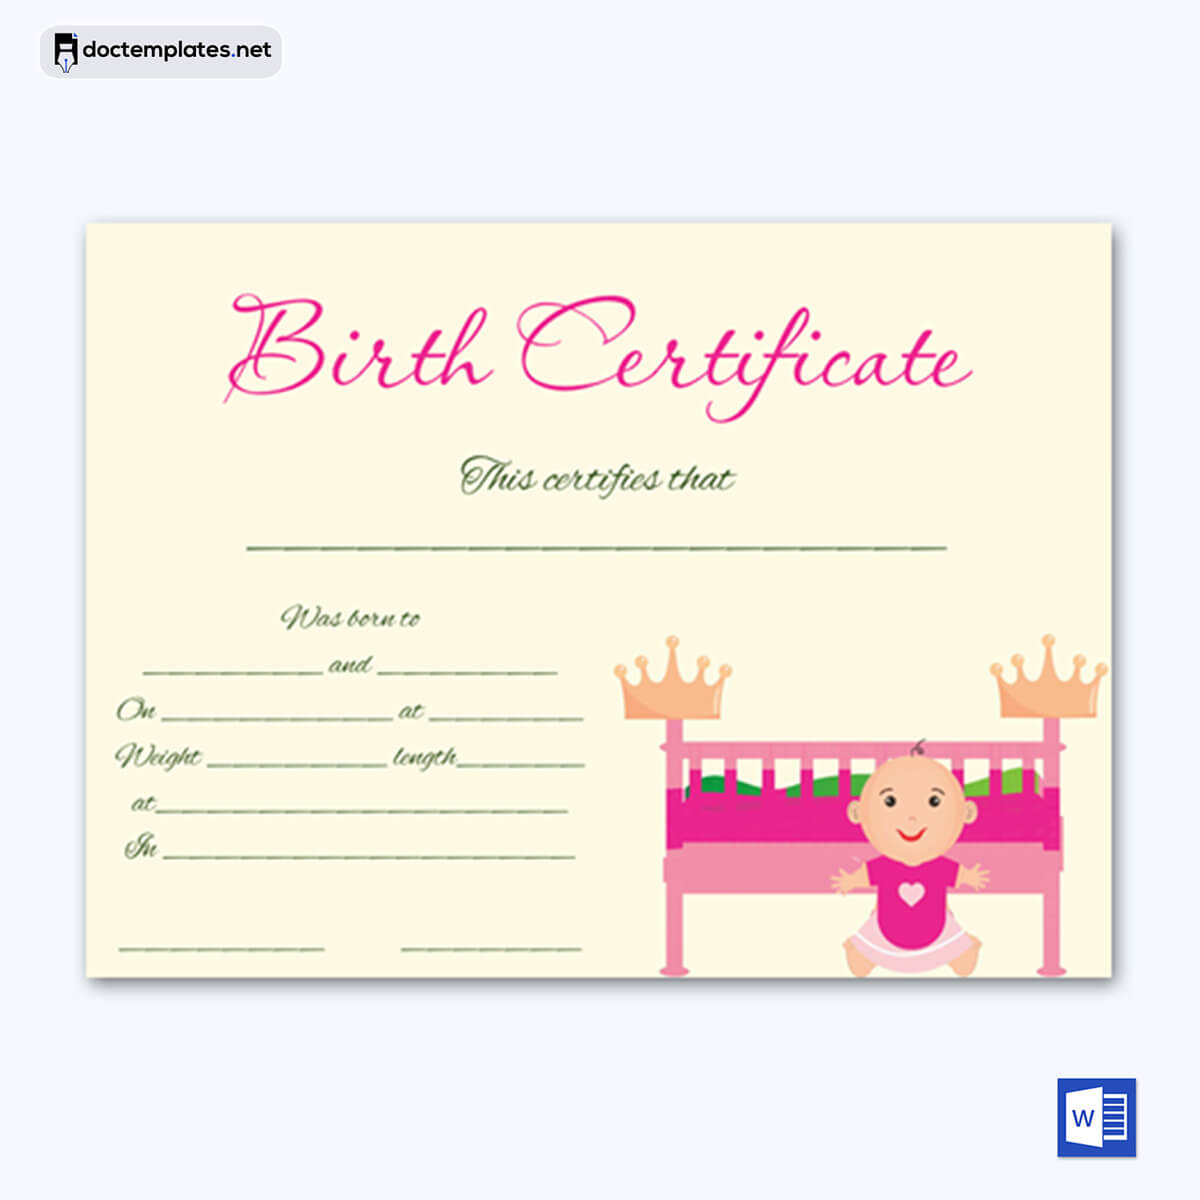 
birth certificate template google docs 06